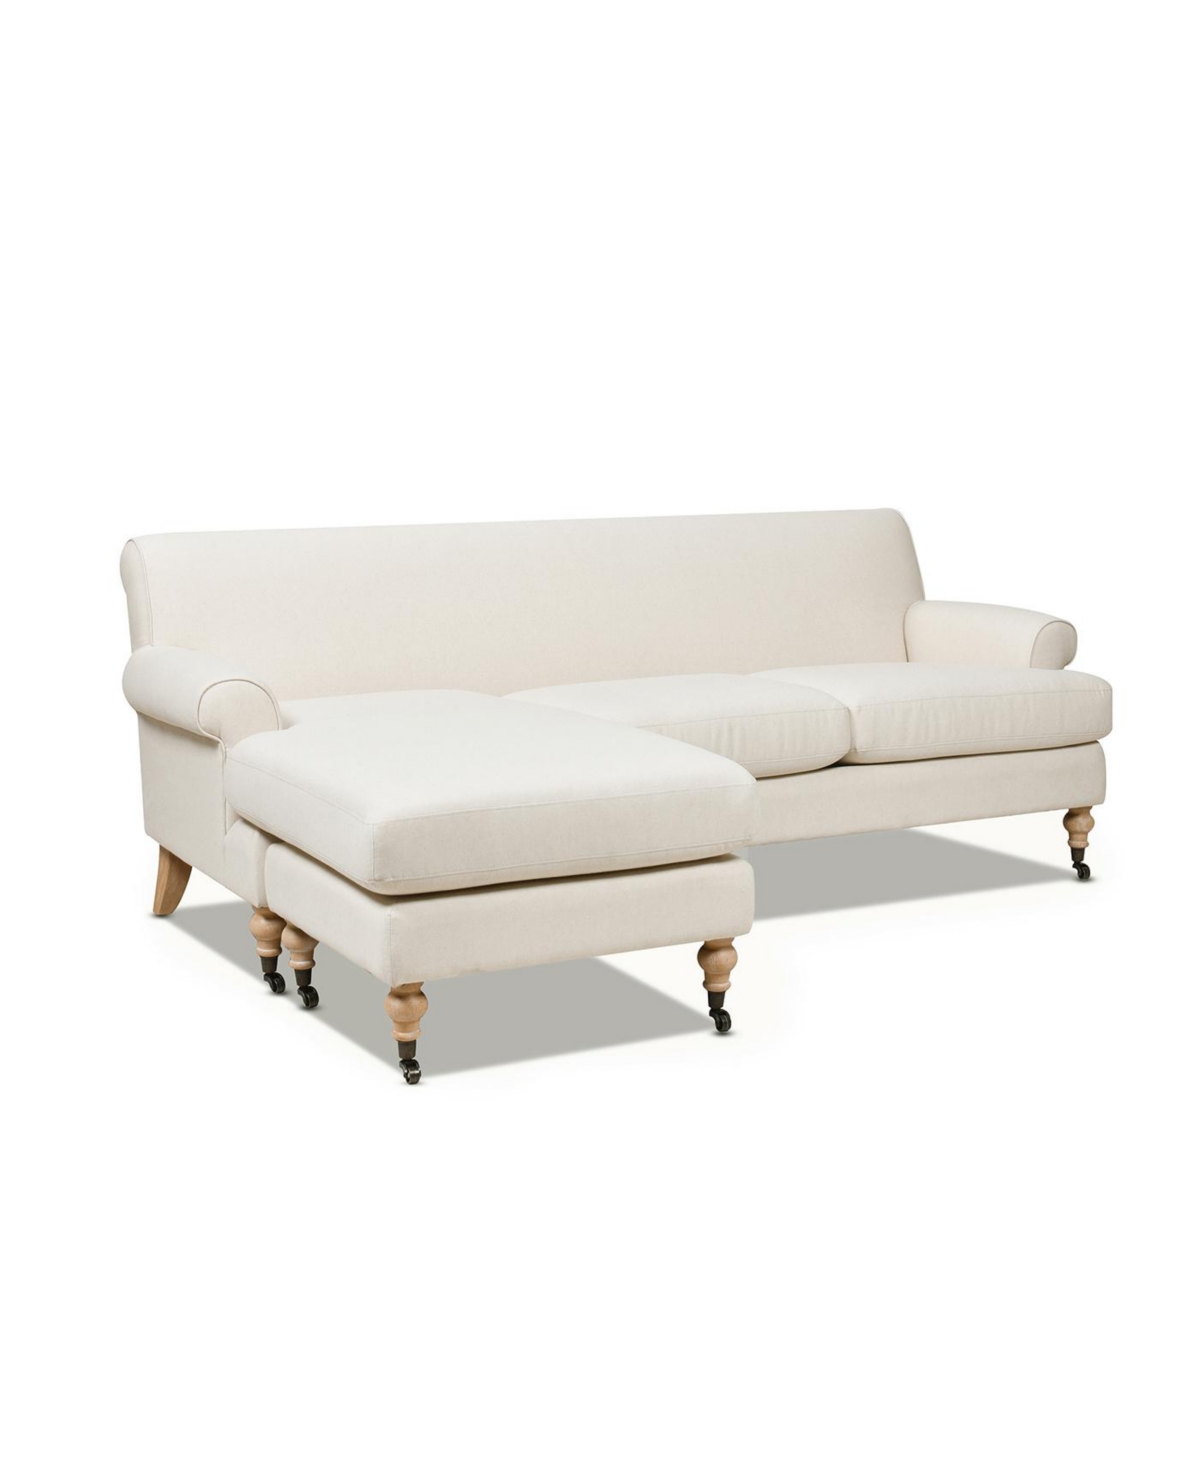 Jennifer Taylor Home Alana 91" L-shape Reversible Sectional Sofa In Light Beige